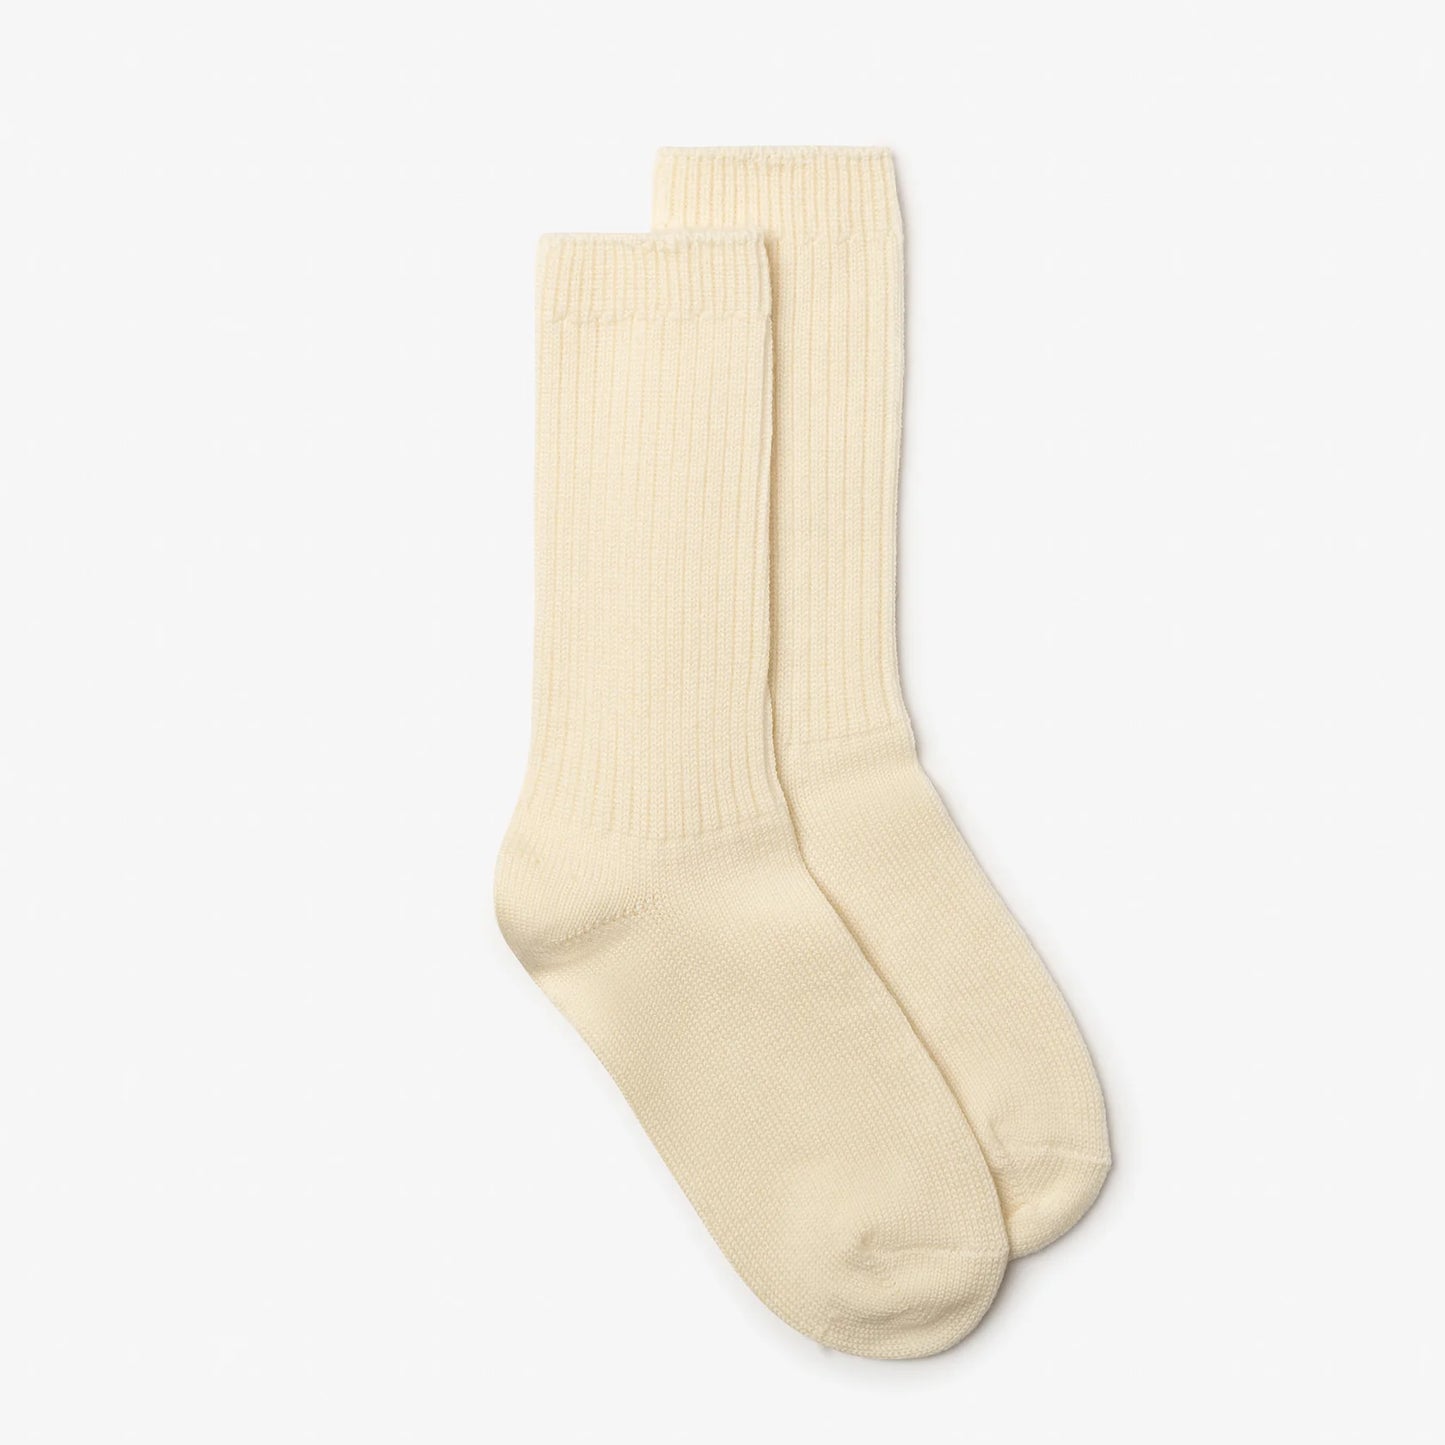 Everyday Classics Merino Socks in Natural